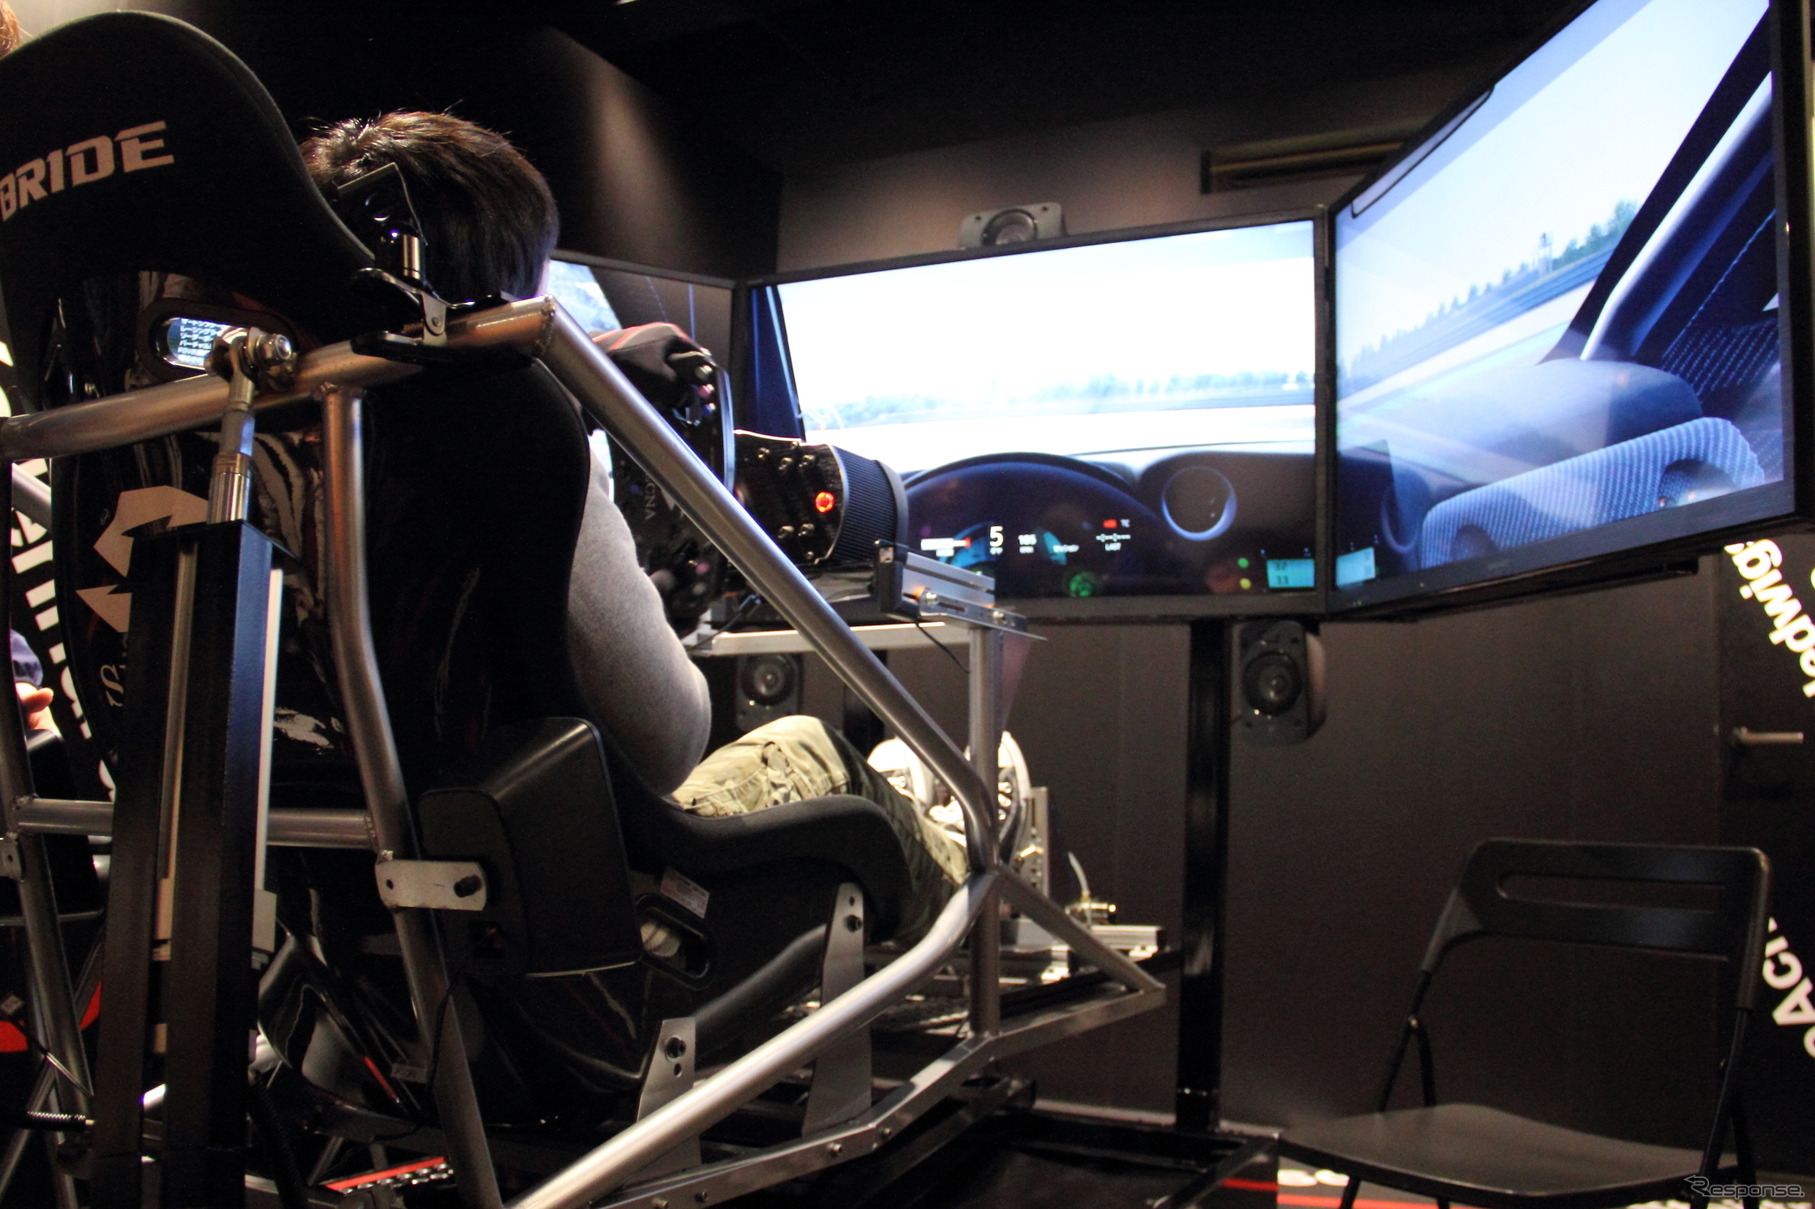 「TOYOTA GAZOO Racing　PADDOCK in GINZA」に設置されている本格シミュレーター